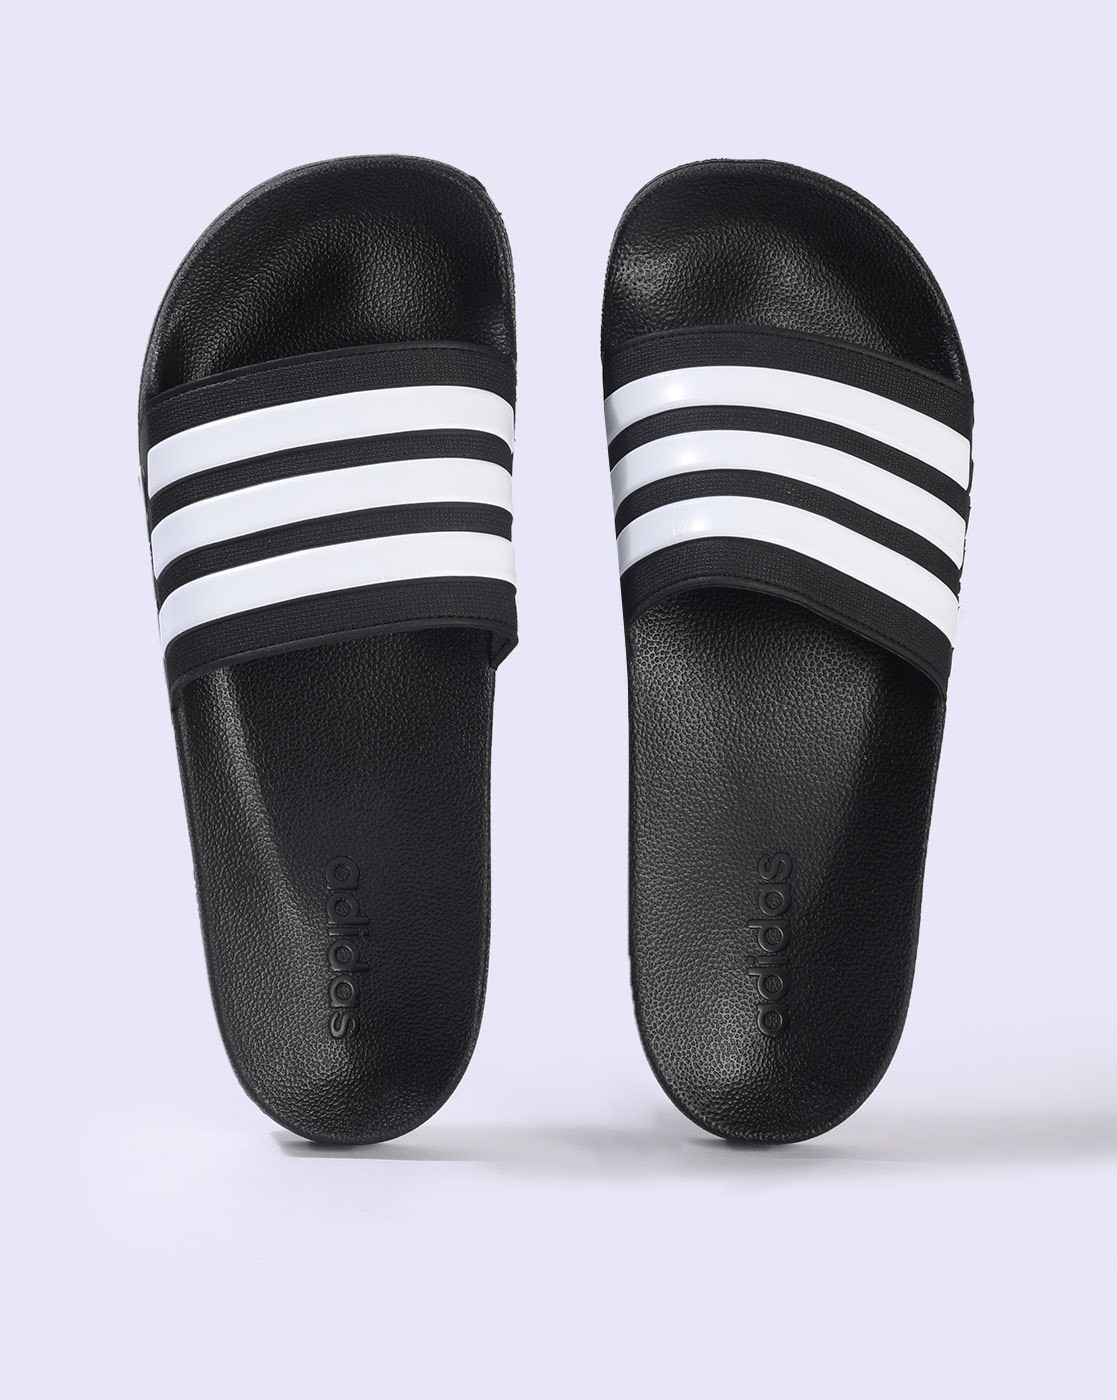 Adidas Strap Slippers for Women | Mercari